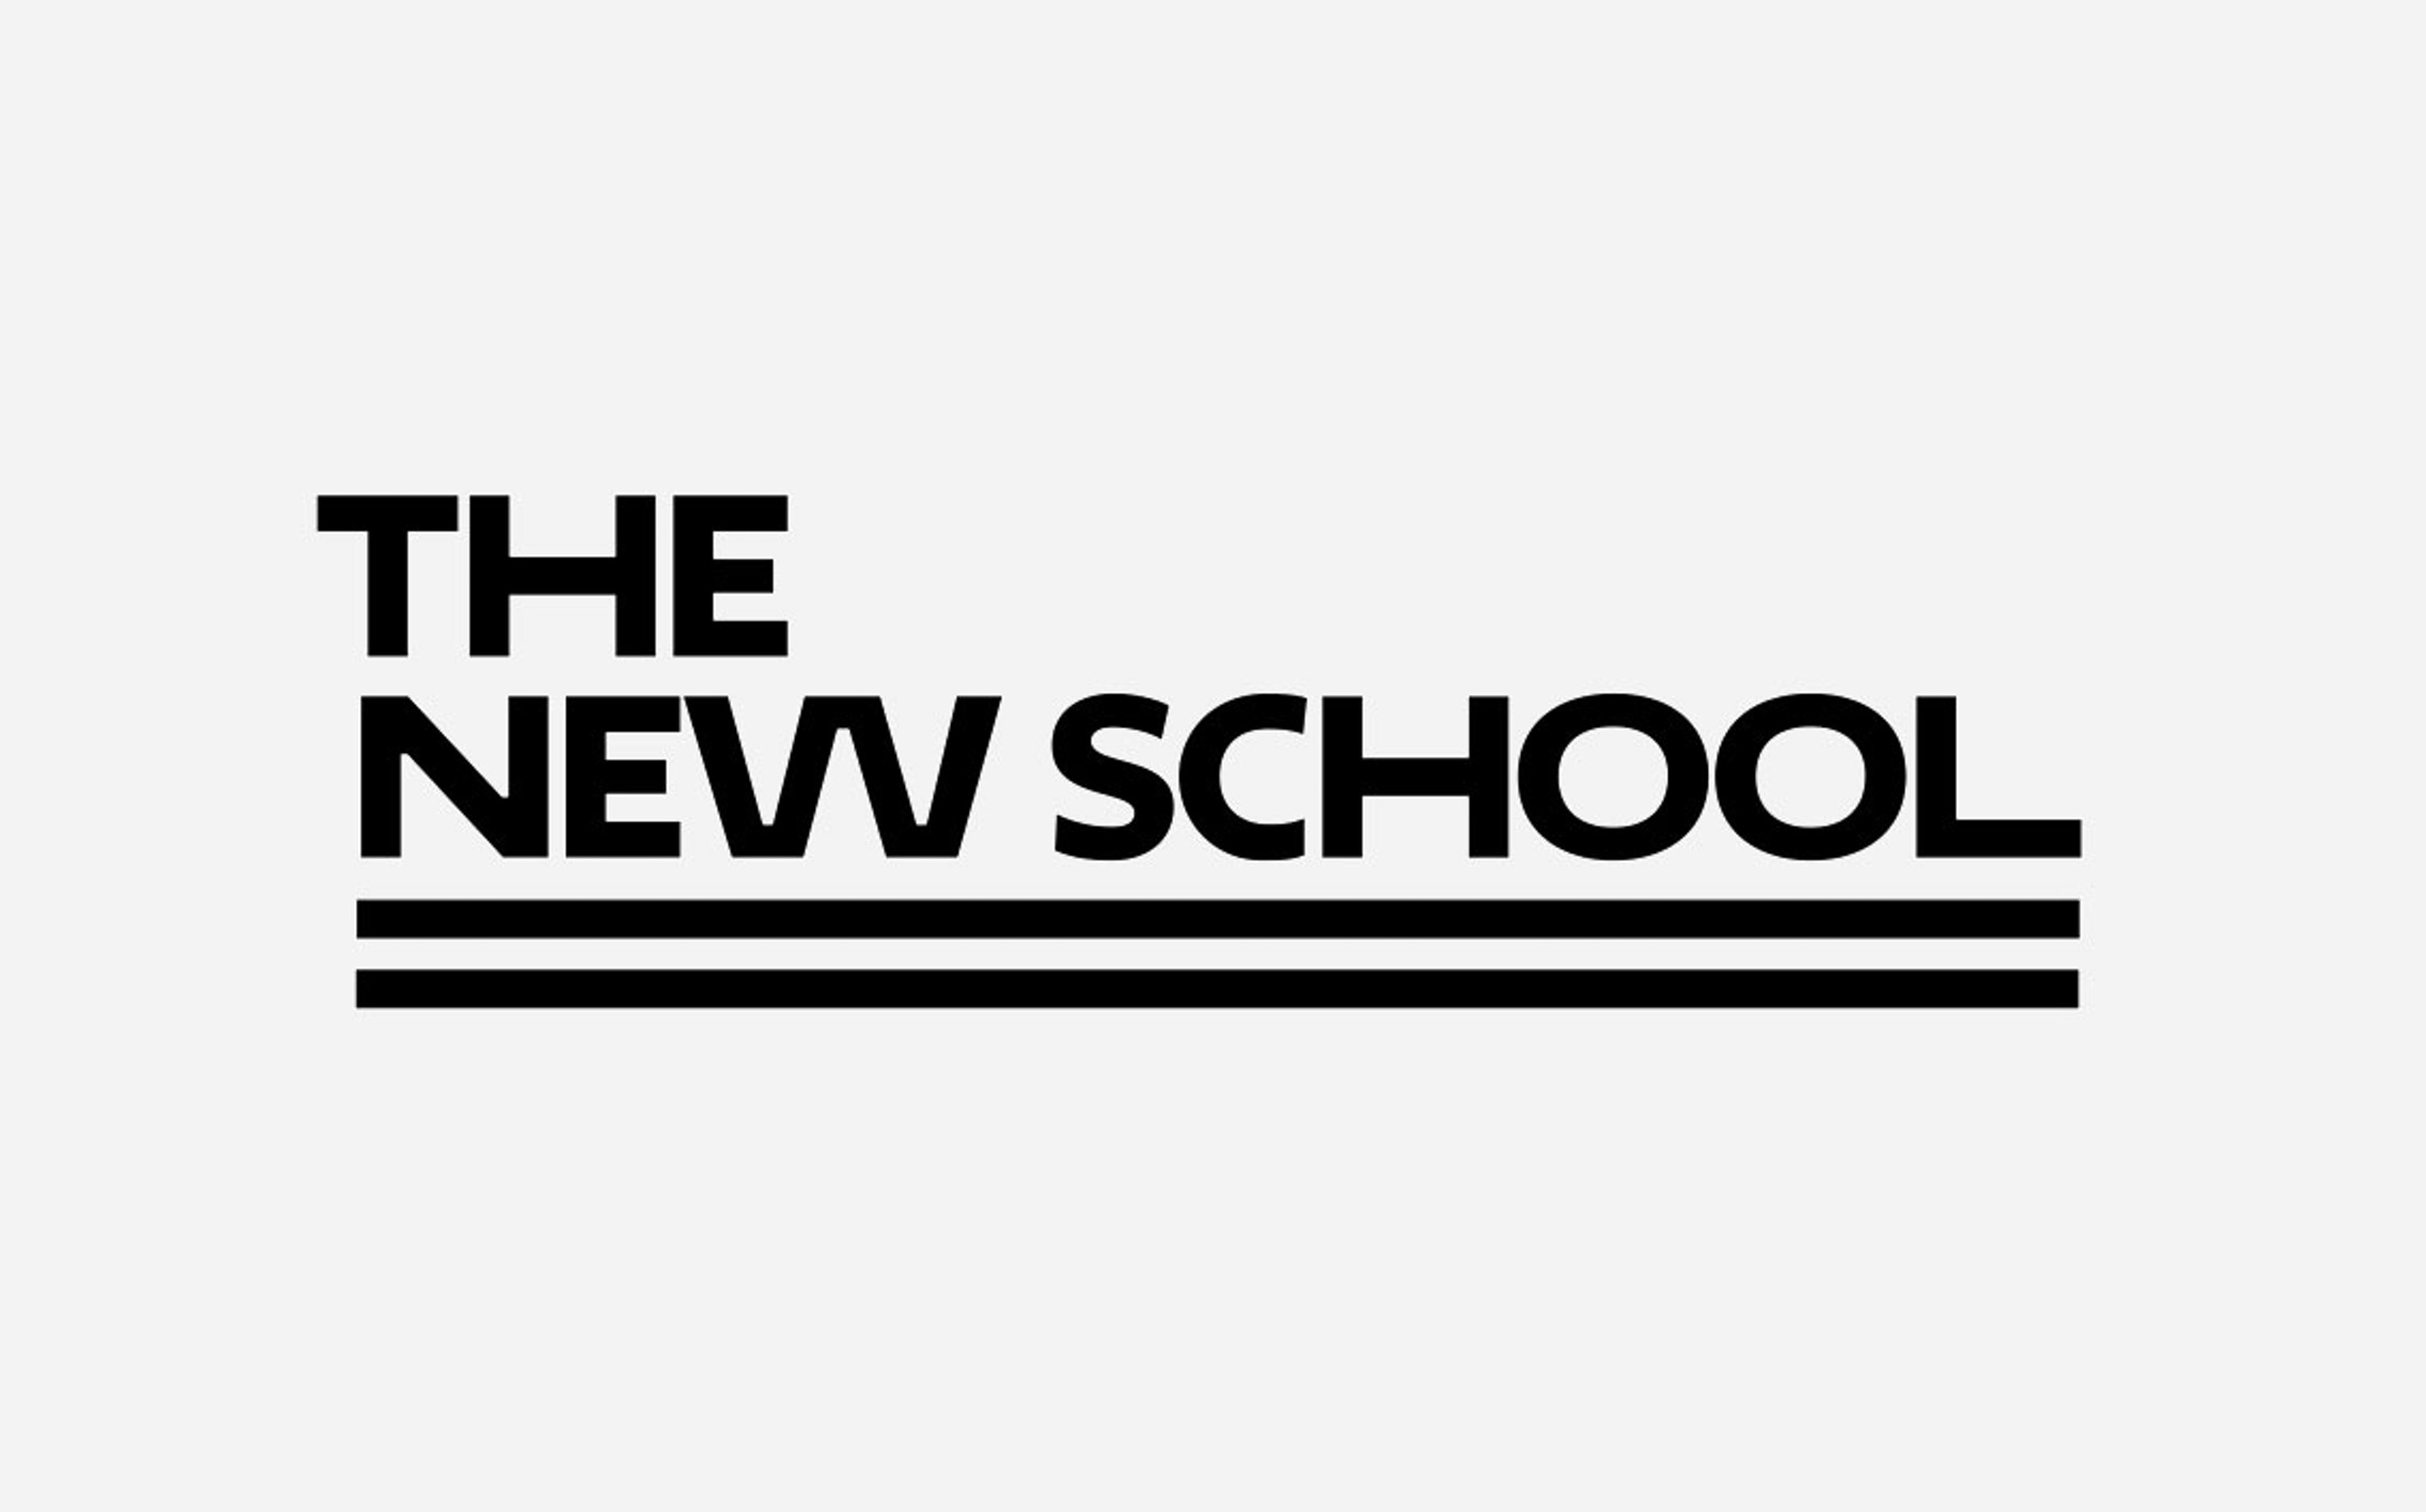 This school is new. New School логотип. Новая школа логотип. Parsons School of Design логотип. Надпись New School.